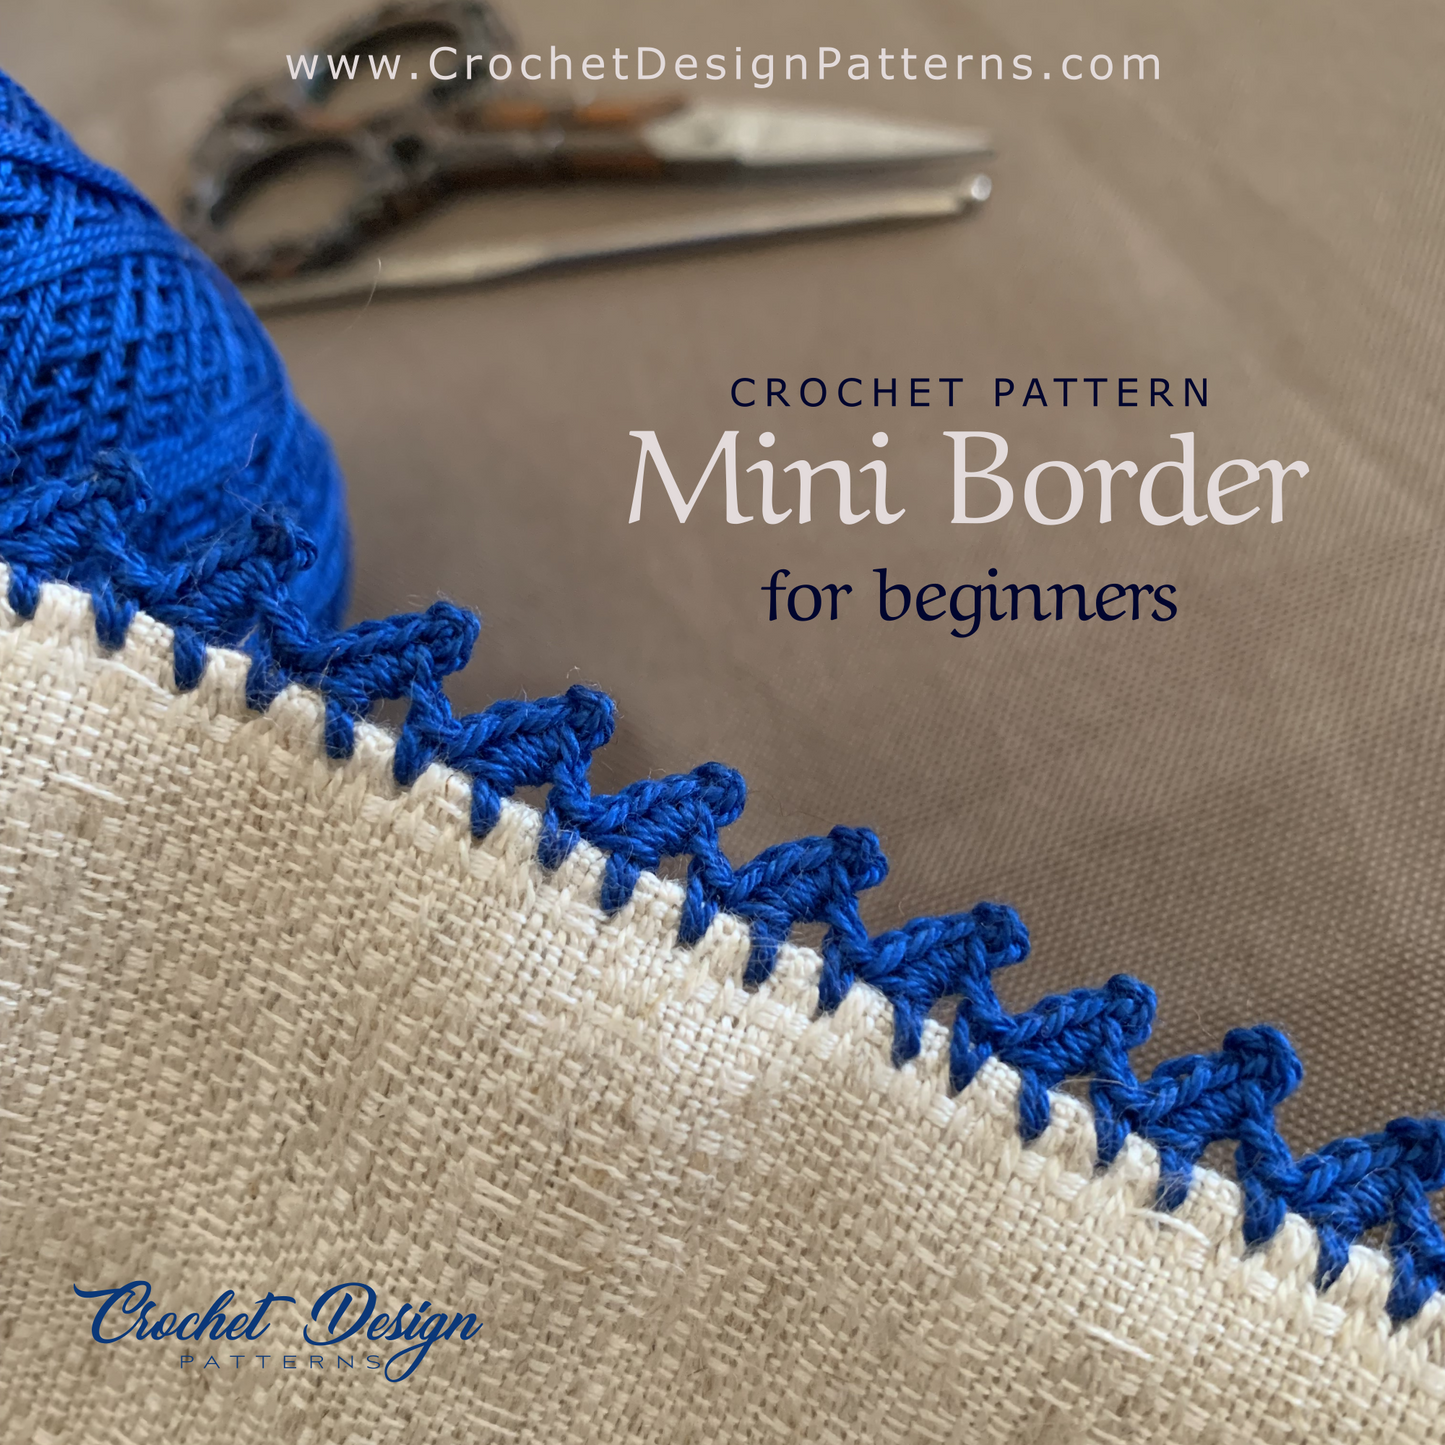 4 crochet patterns for mini borders on fabric | pdf e-book